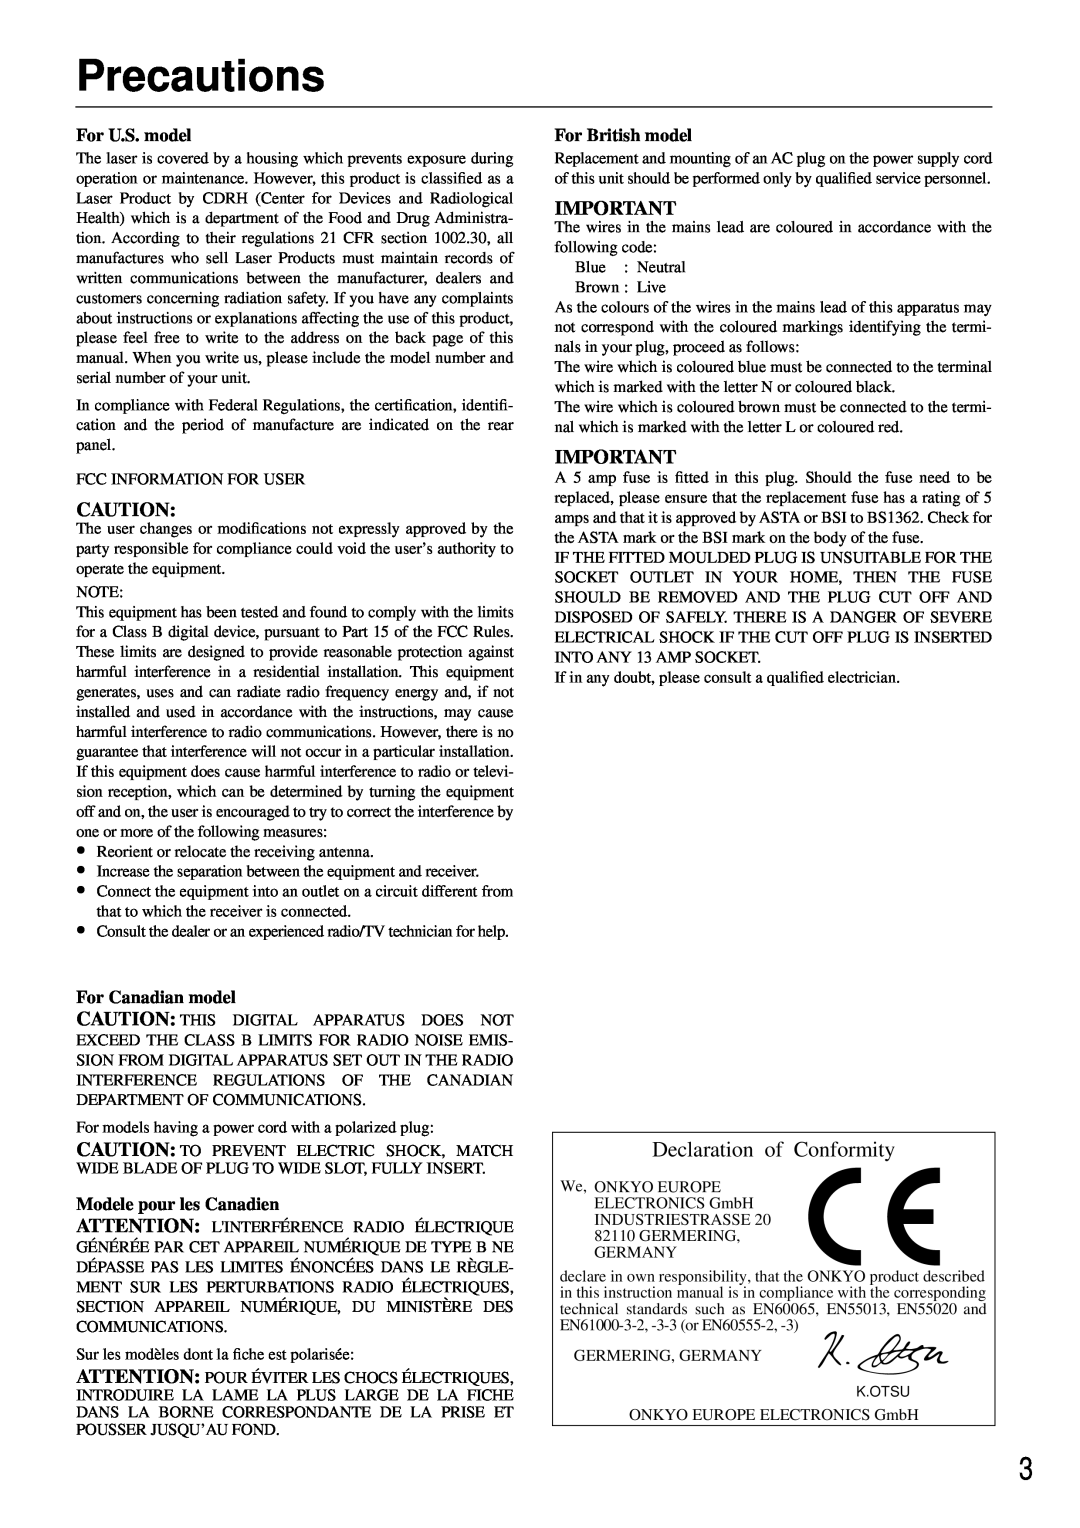 Onkyo DX-C370 instruction manual Precautions, Declaration of Conformity 